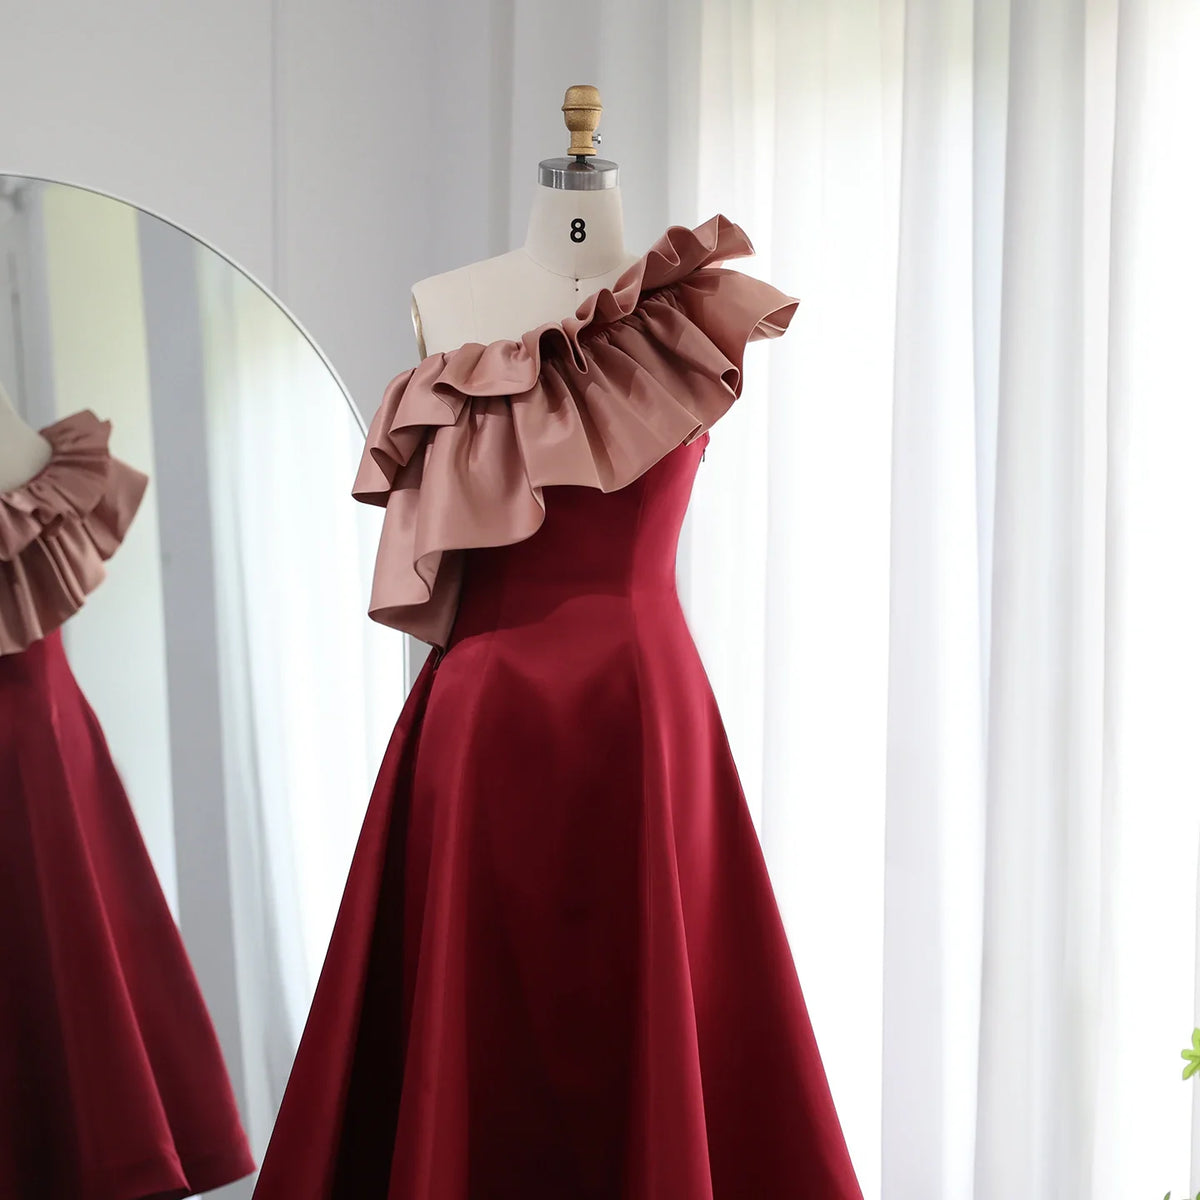 Dreamy Vow Elegant Pink Burgundy Dubai Short Evening Dresses for Wedding Party 2023 Arabic Women Midi Formal Guest Gowns F 057